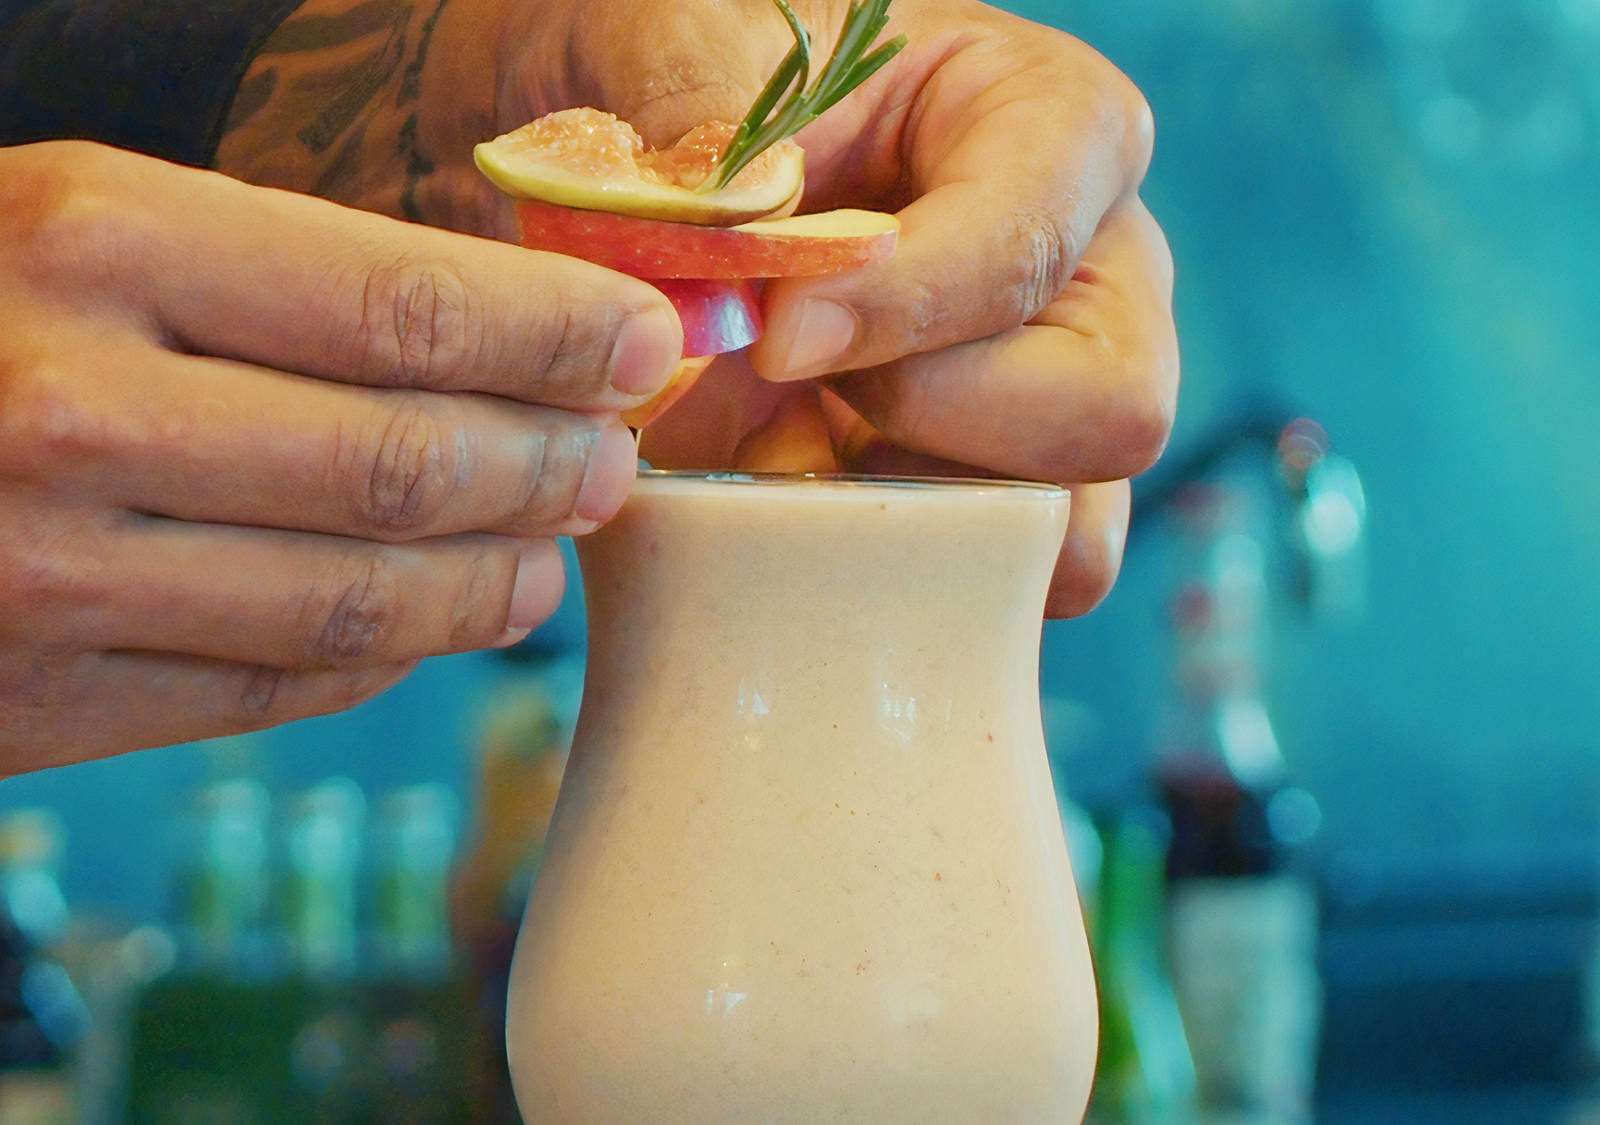 Recipe for Apple Cinnamon Hygge – the Scandinavian mocktail